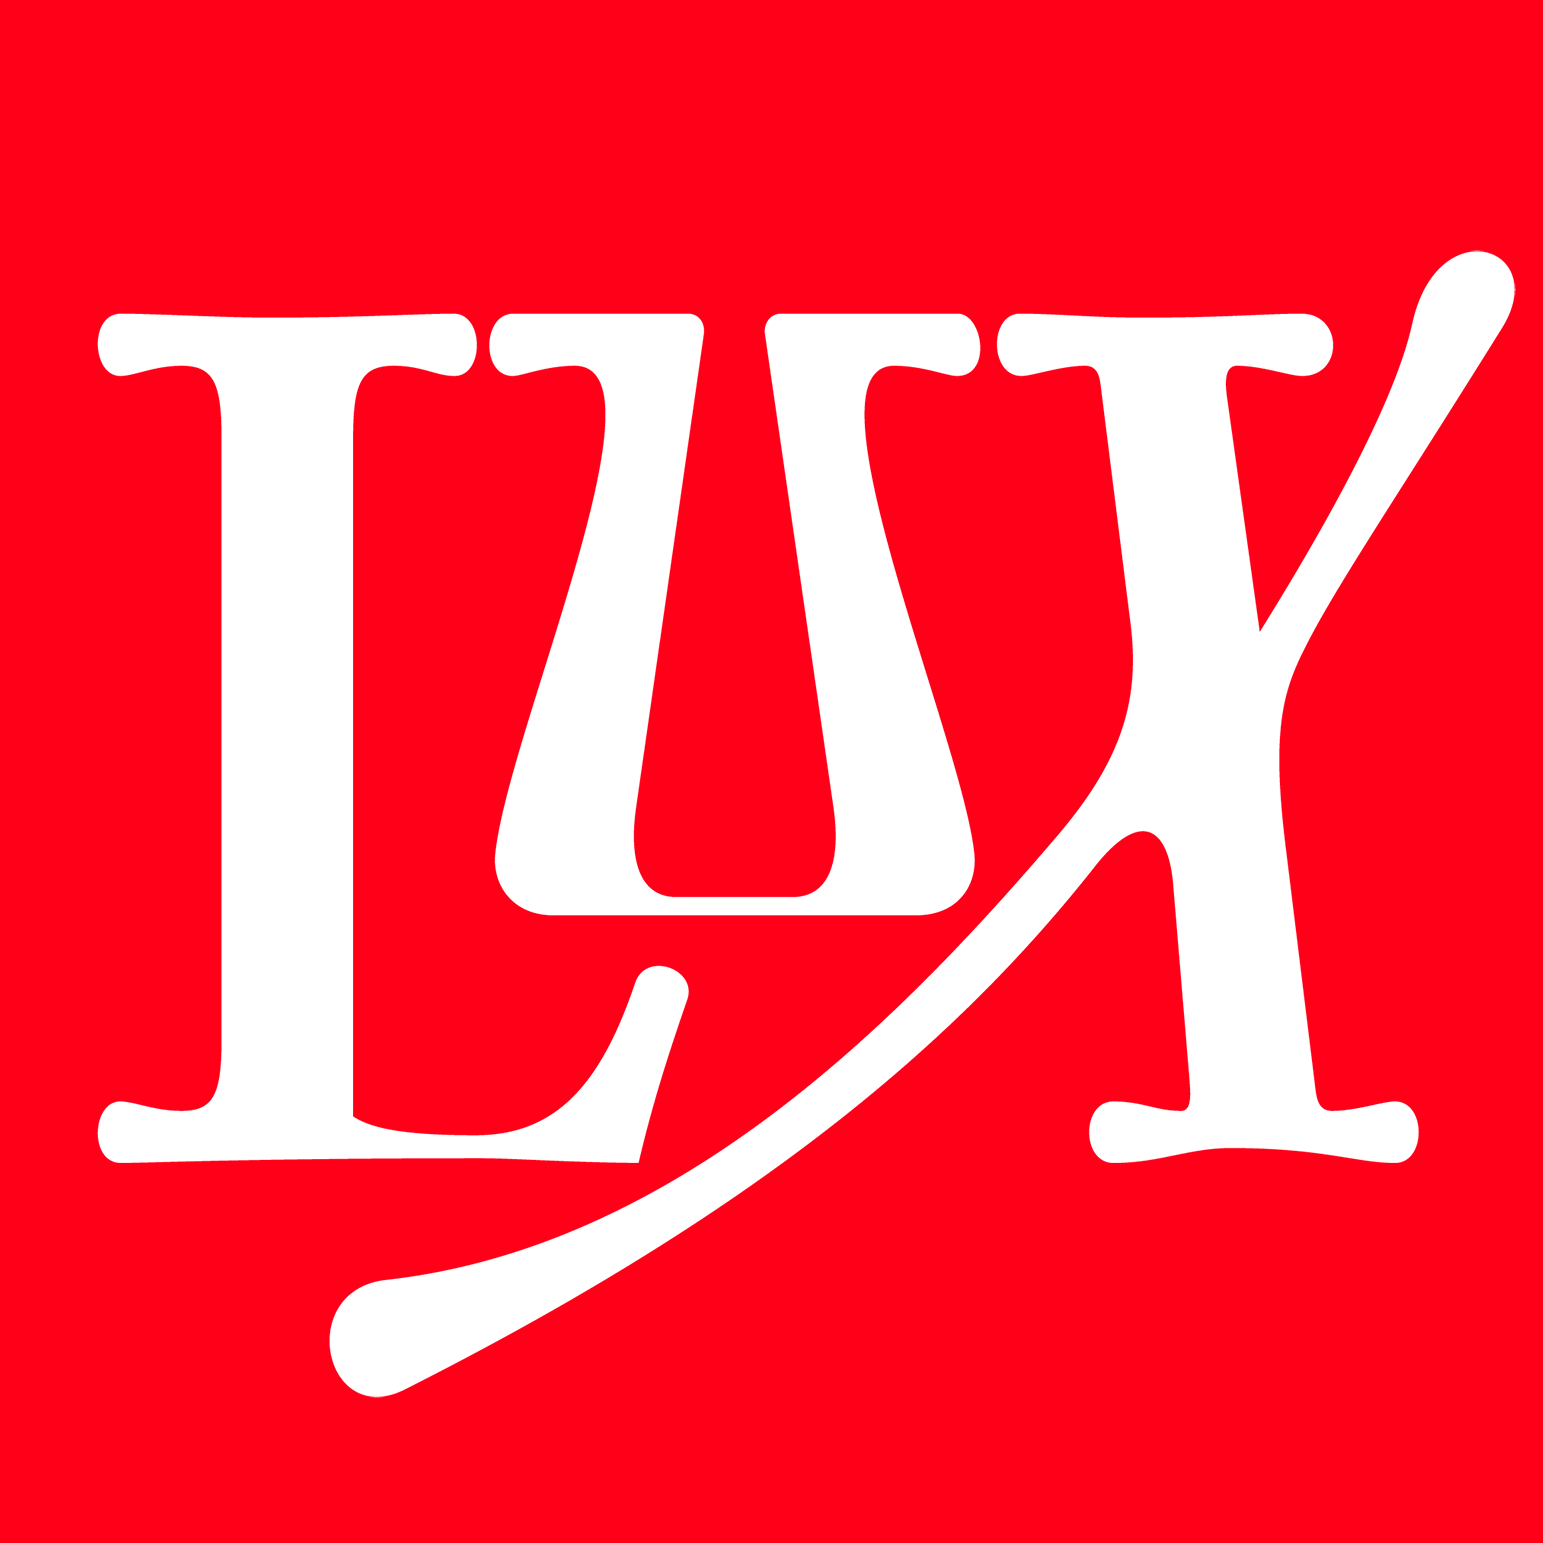 Lux identity and zine